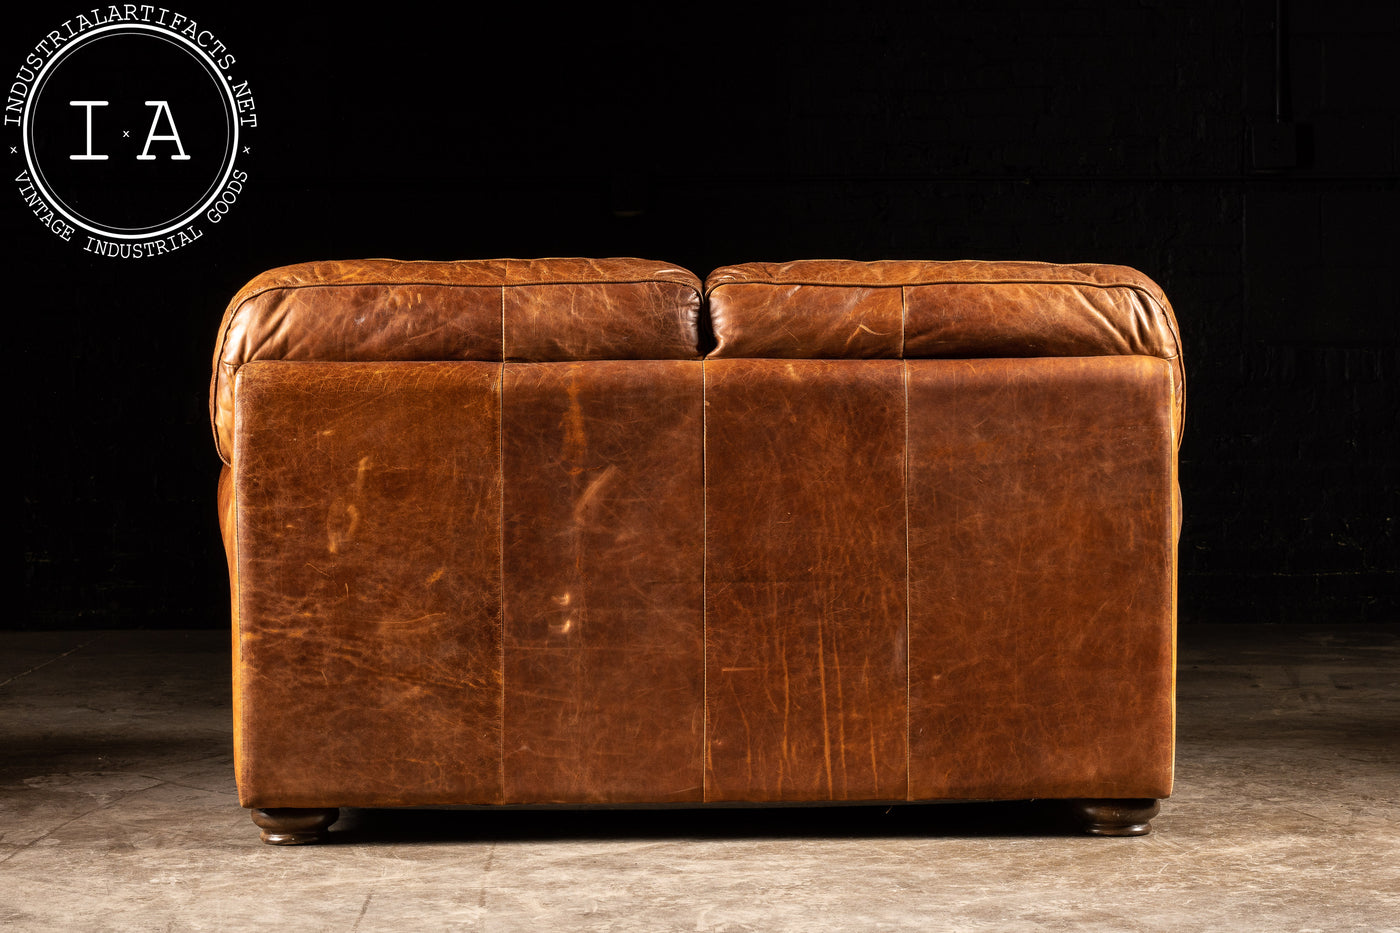 Vintage Leather Sofa in Camel